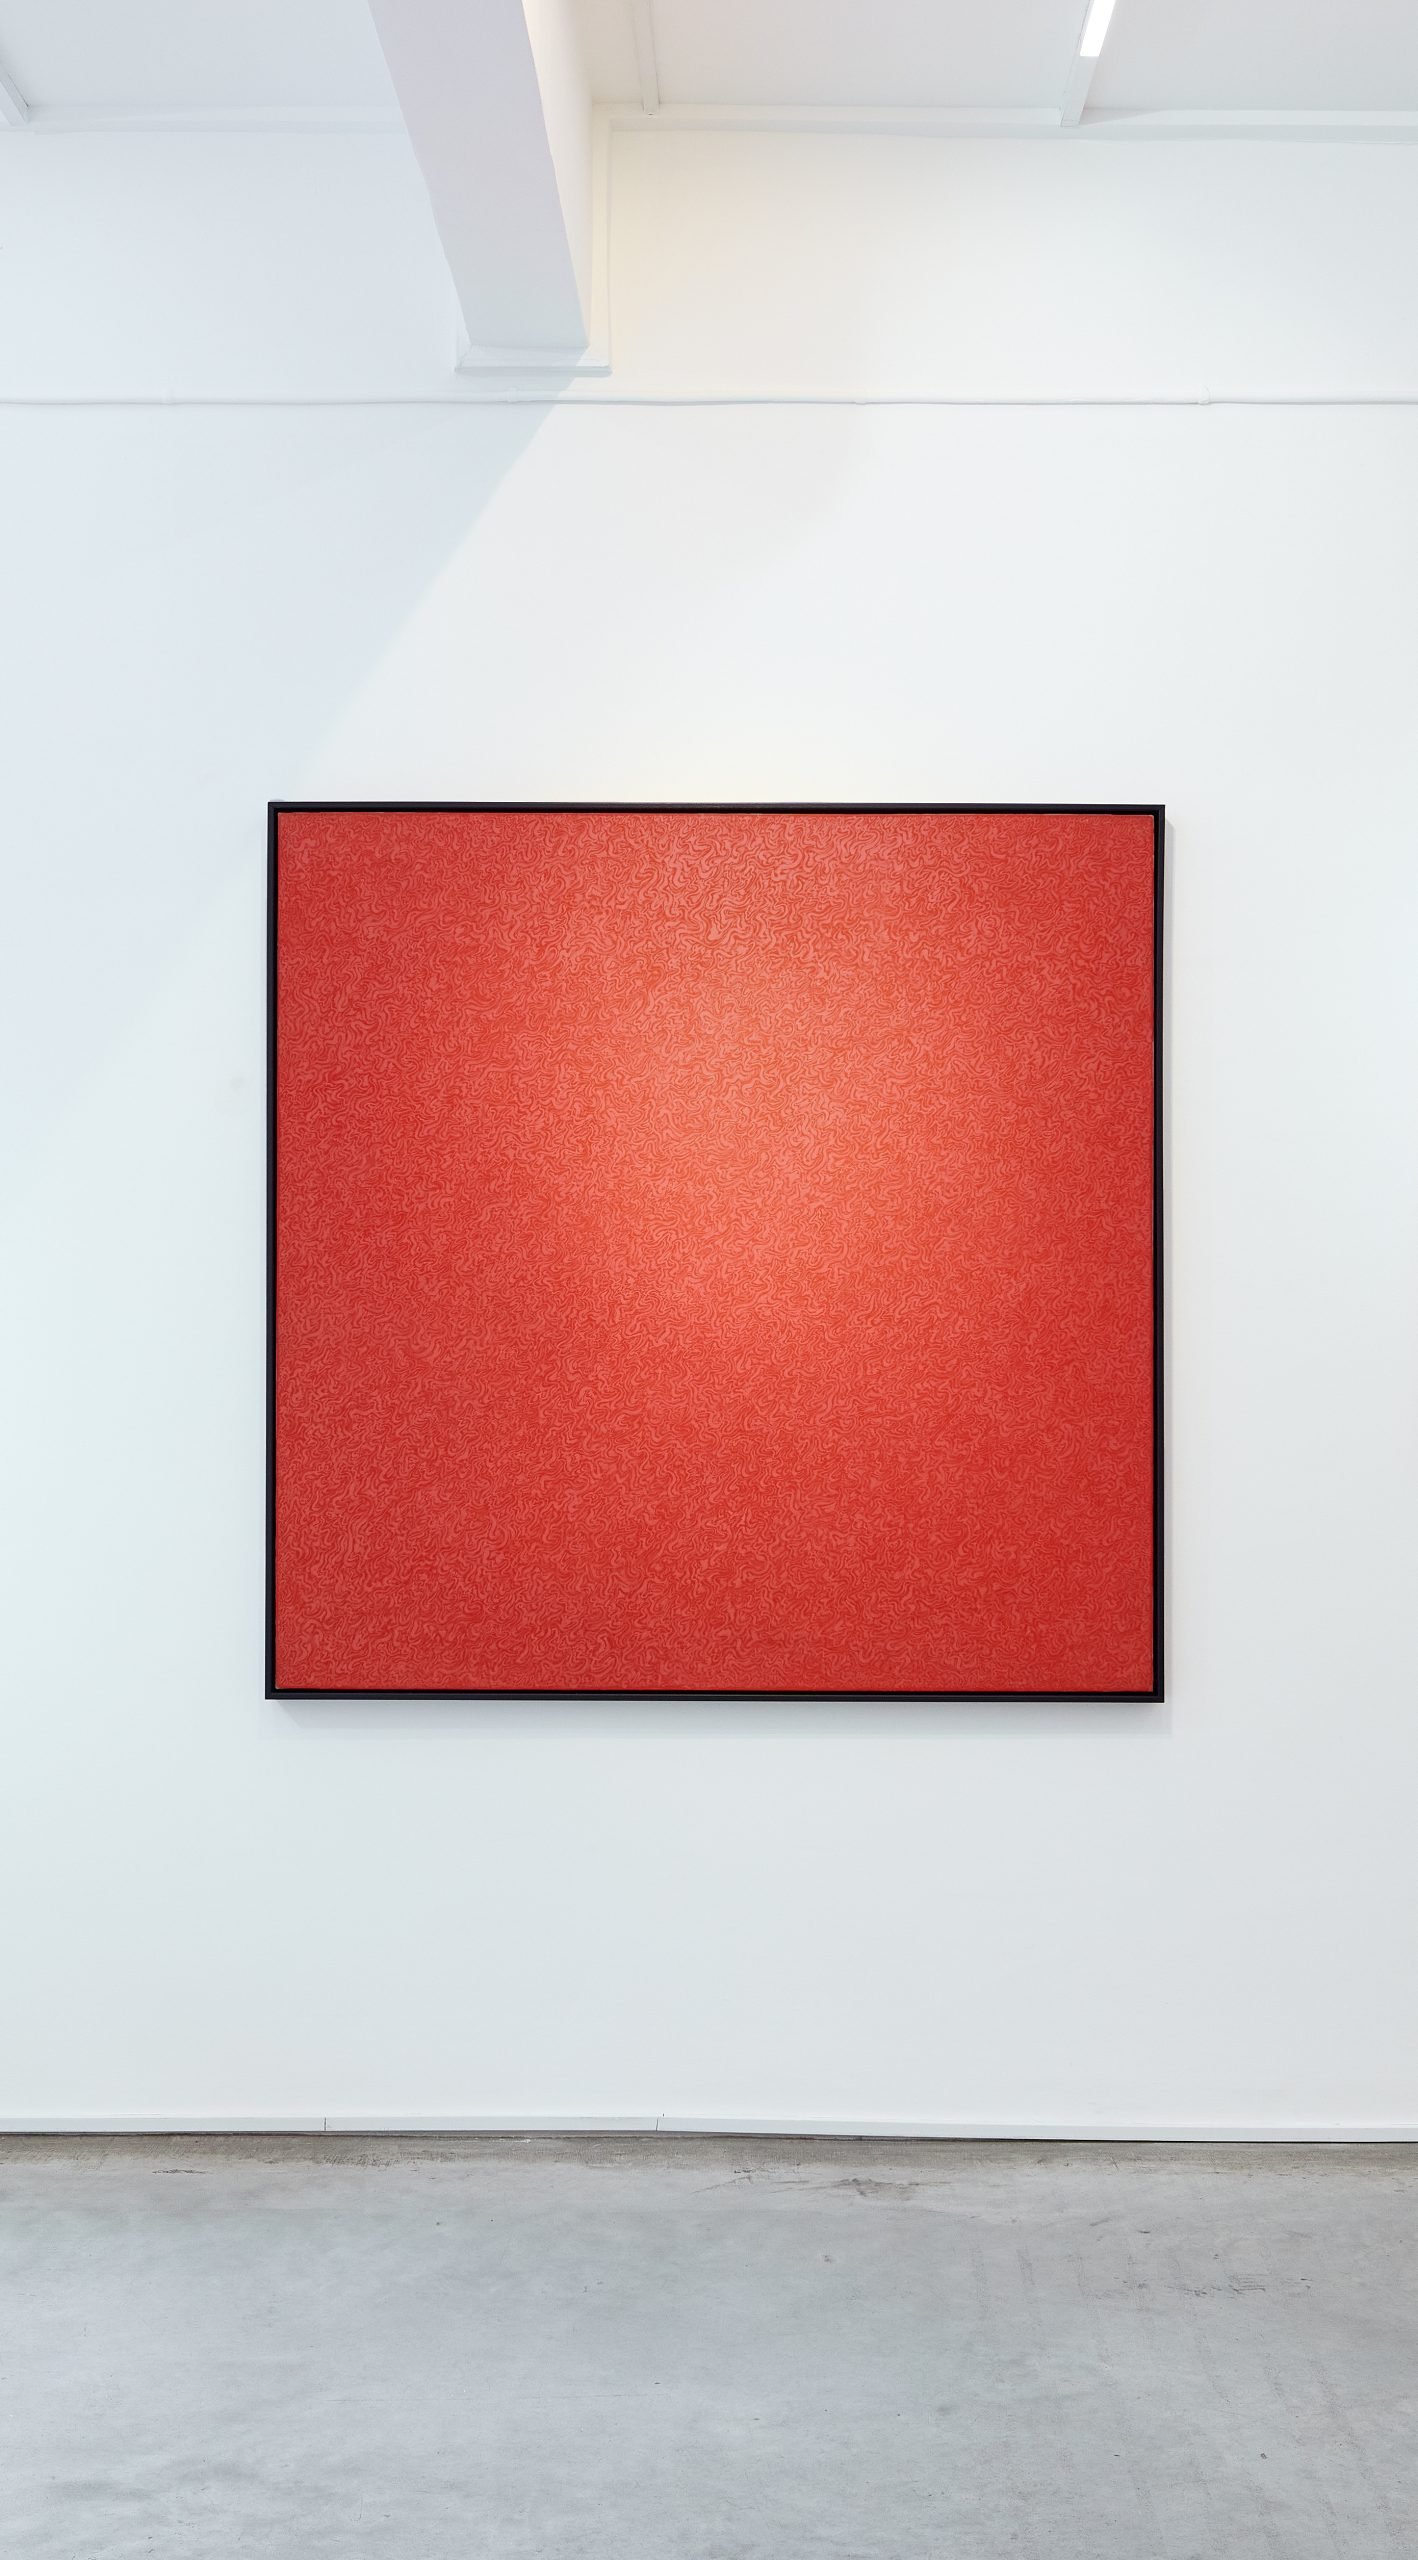 Luigi Boille, Arabesco – rosso cosmico, 1975, oil on canvas, 150 x 150 cm, LBo303379 – 5